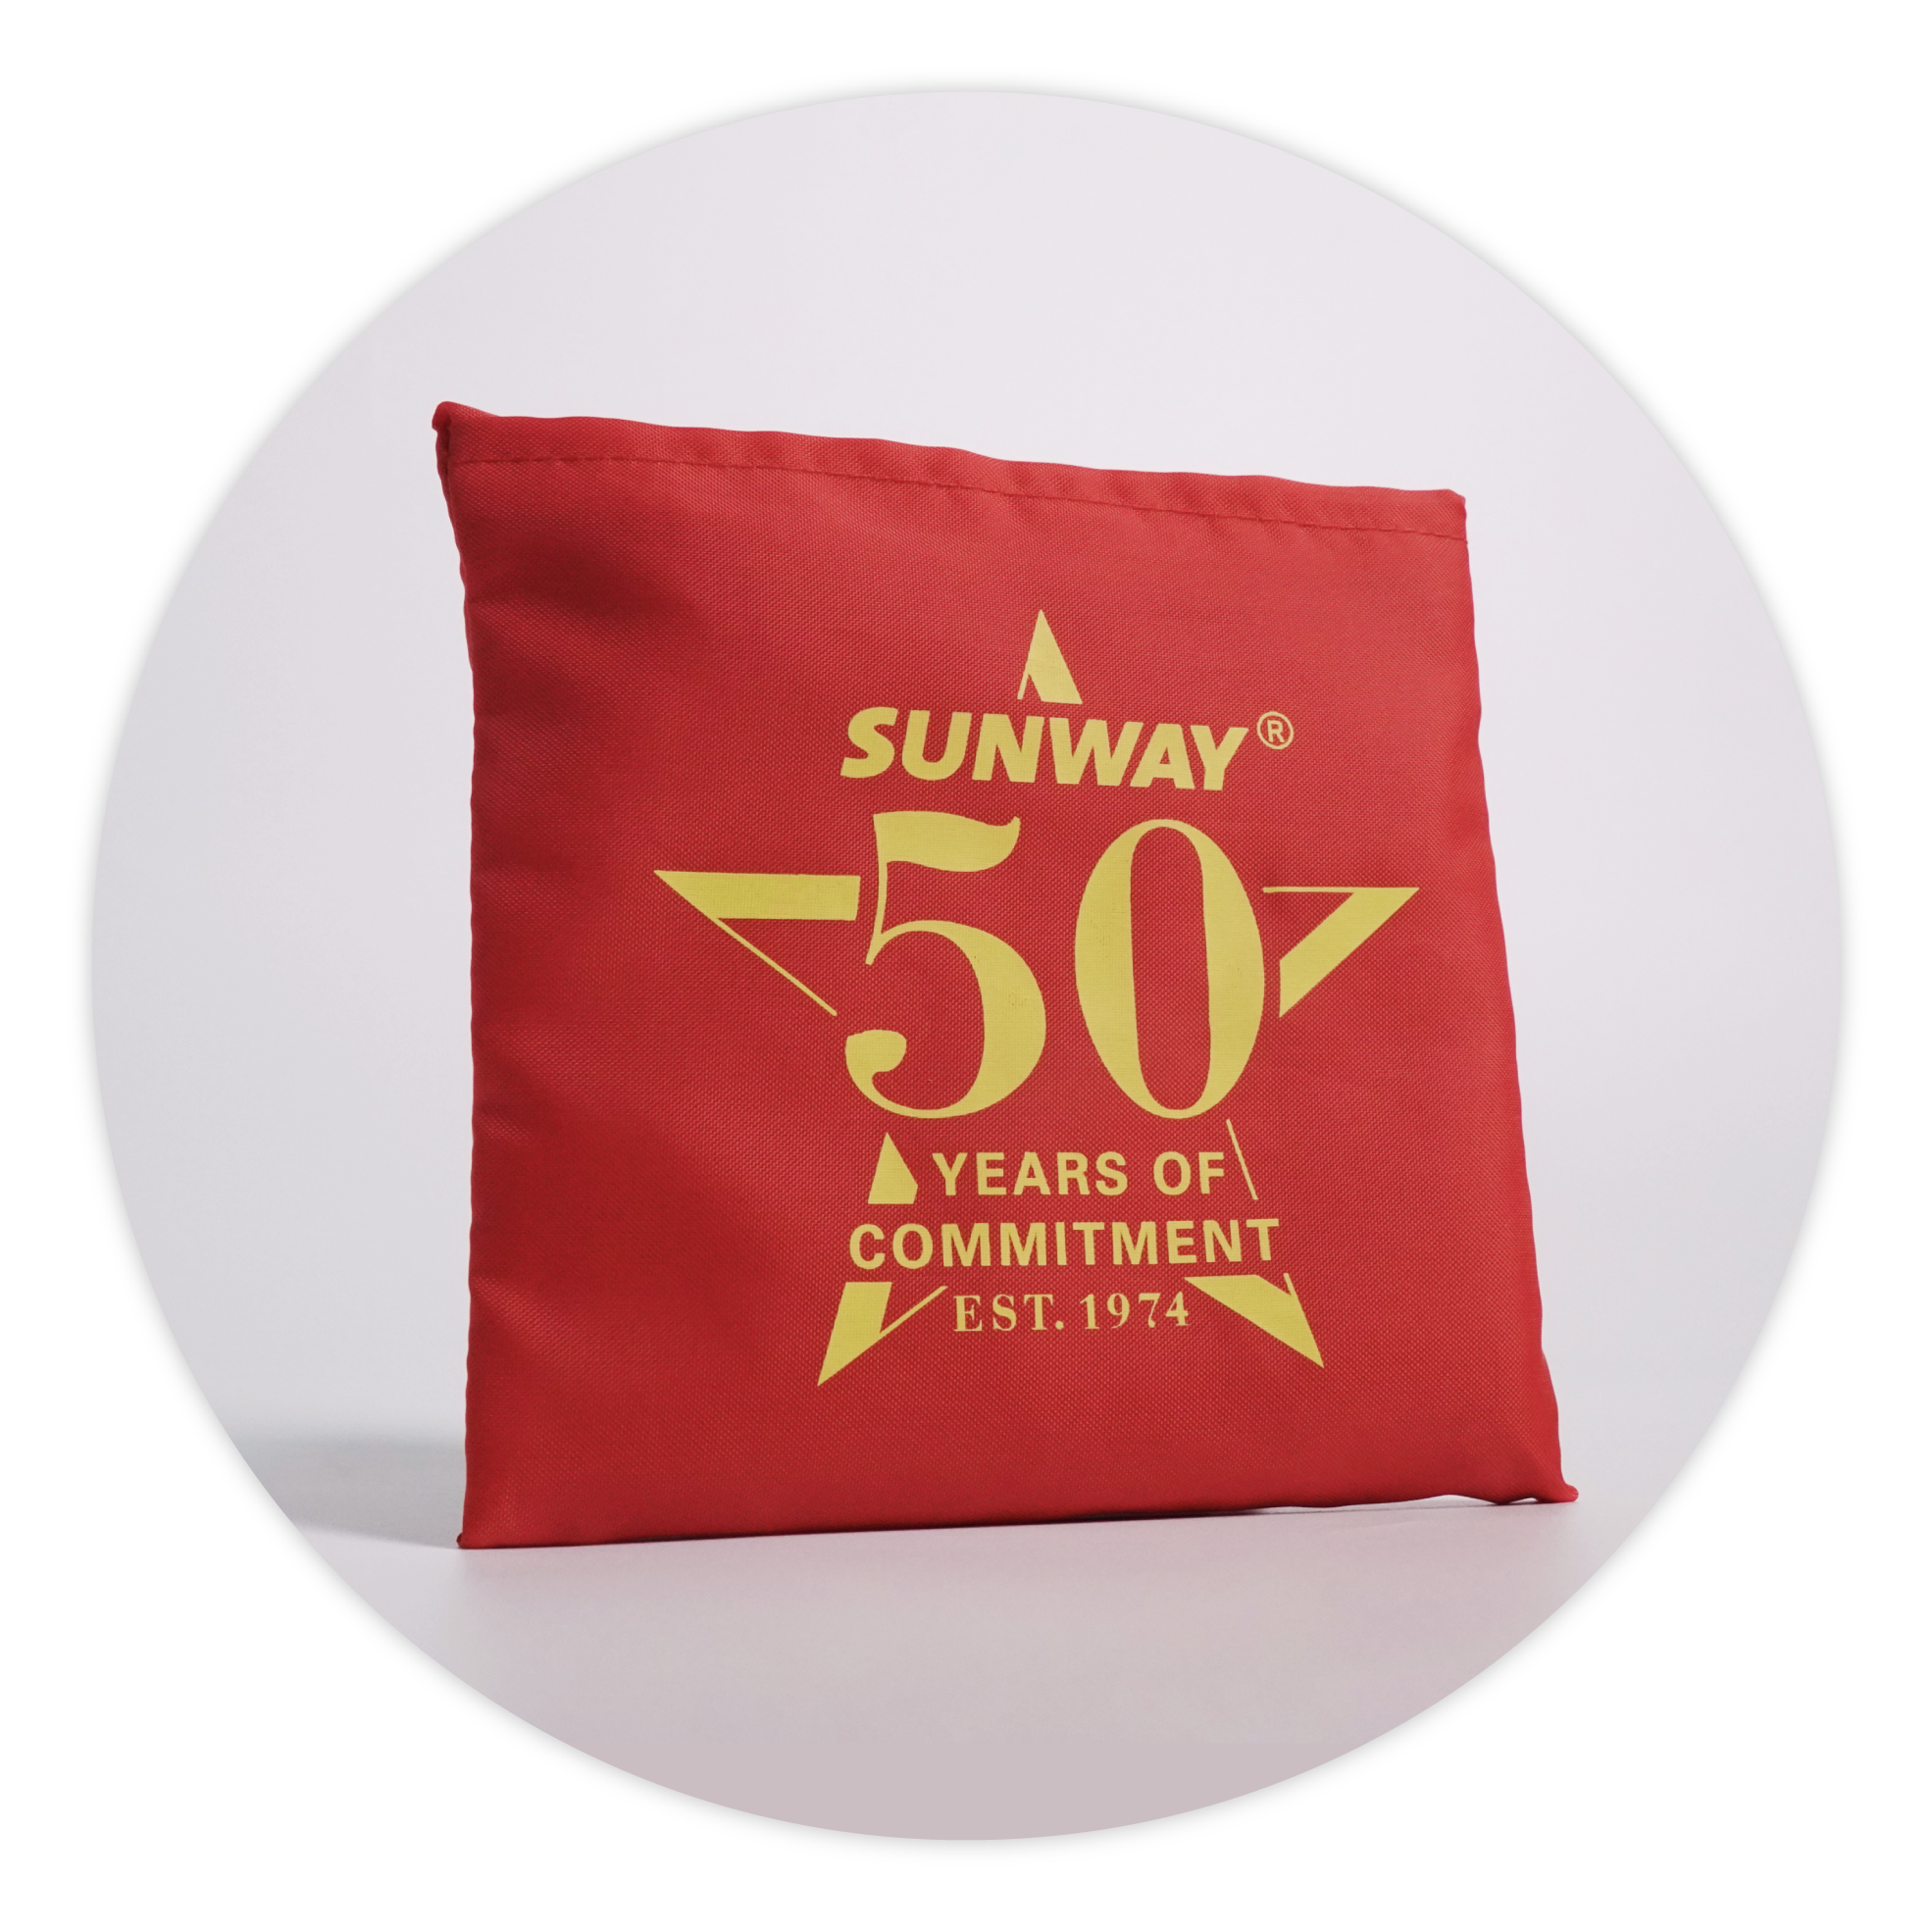 Sunway Berhad Smart Bag collaboration with Buzz for ESG Campaign (Environmen Social Governance Campaign)